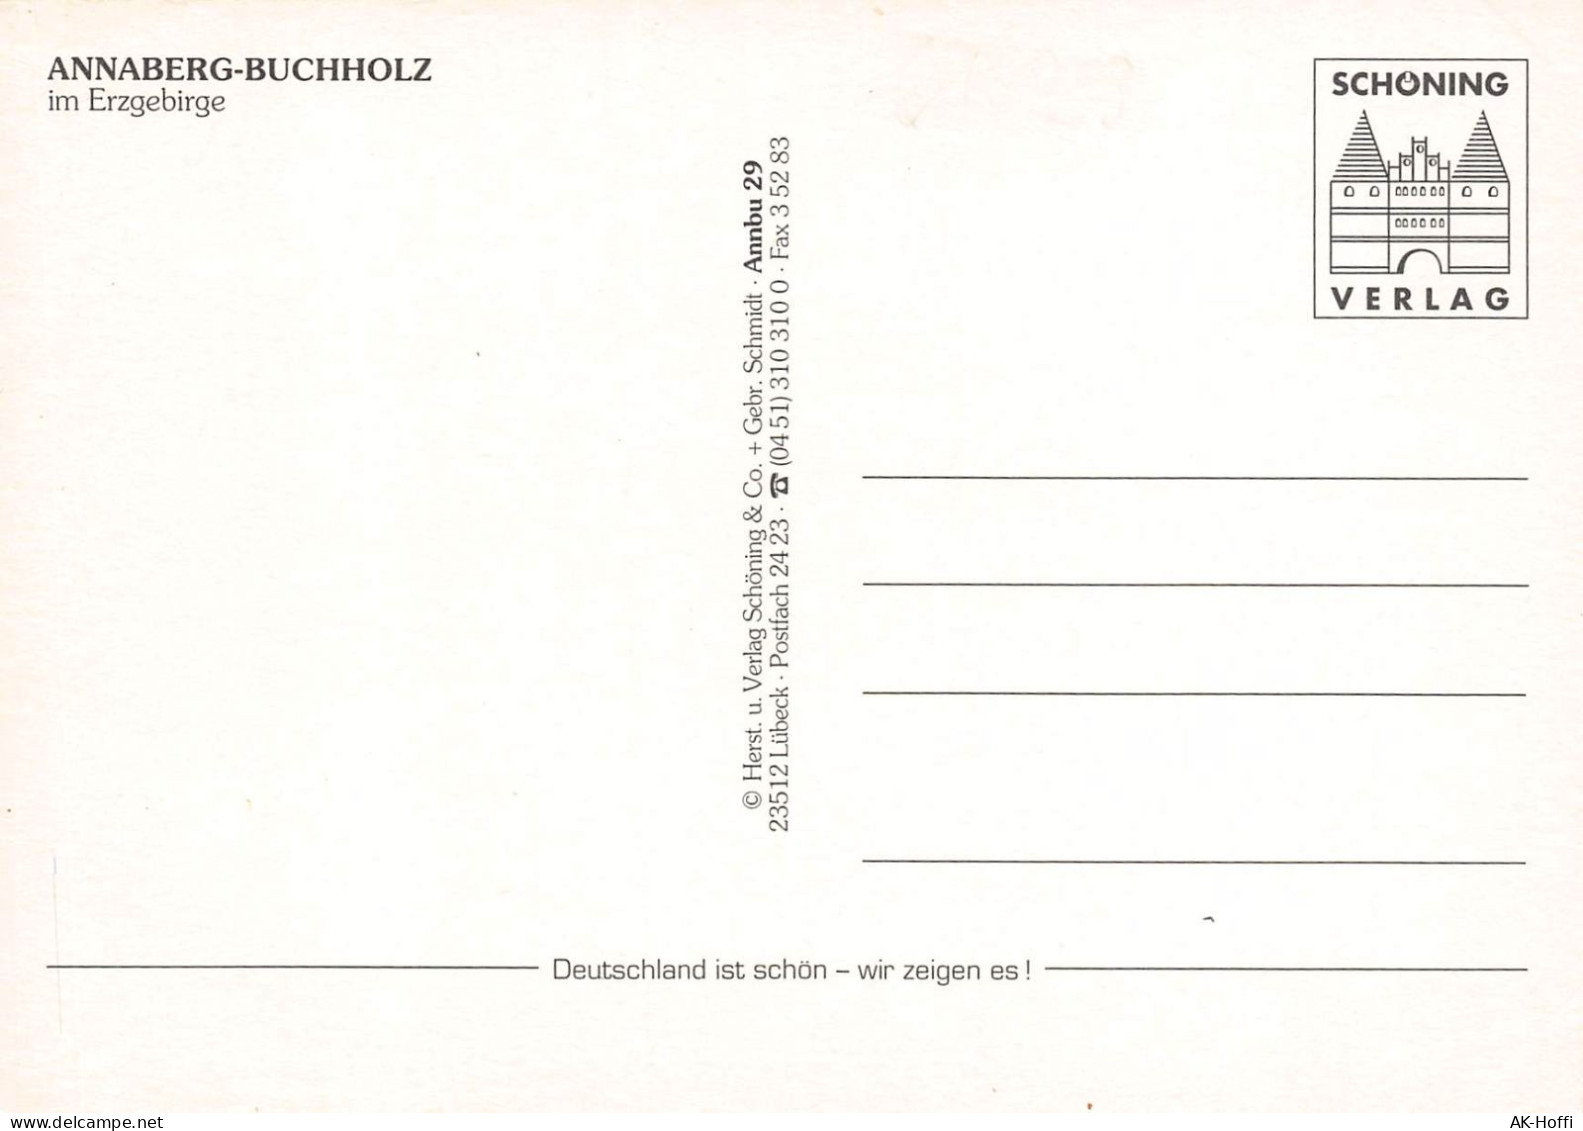 Annaberg - Buchholz - Mehrbildkarte Grüße Aus Dem Sächsischen Annaberg-Buchholz - Annaberg-Buchholz